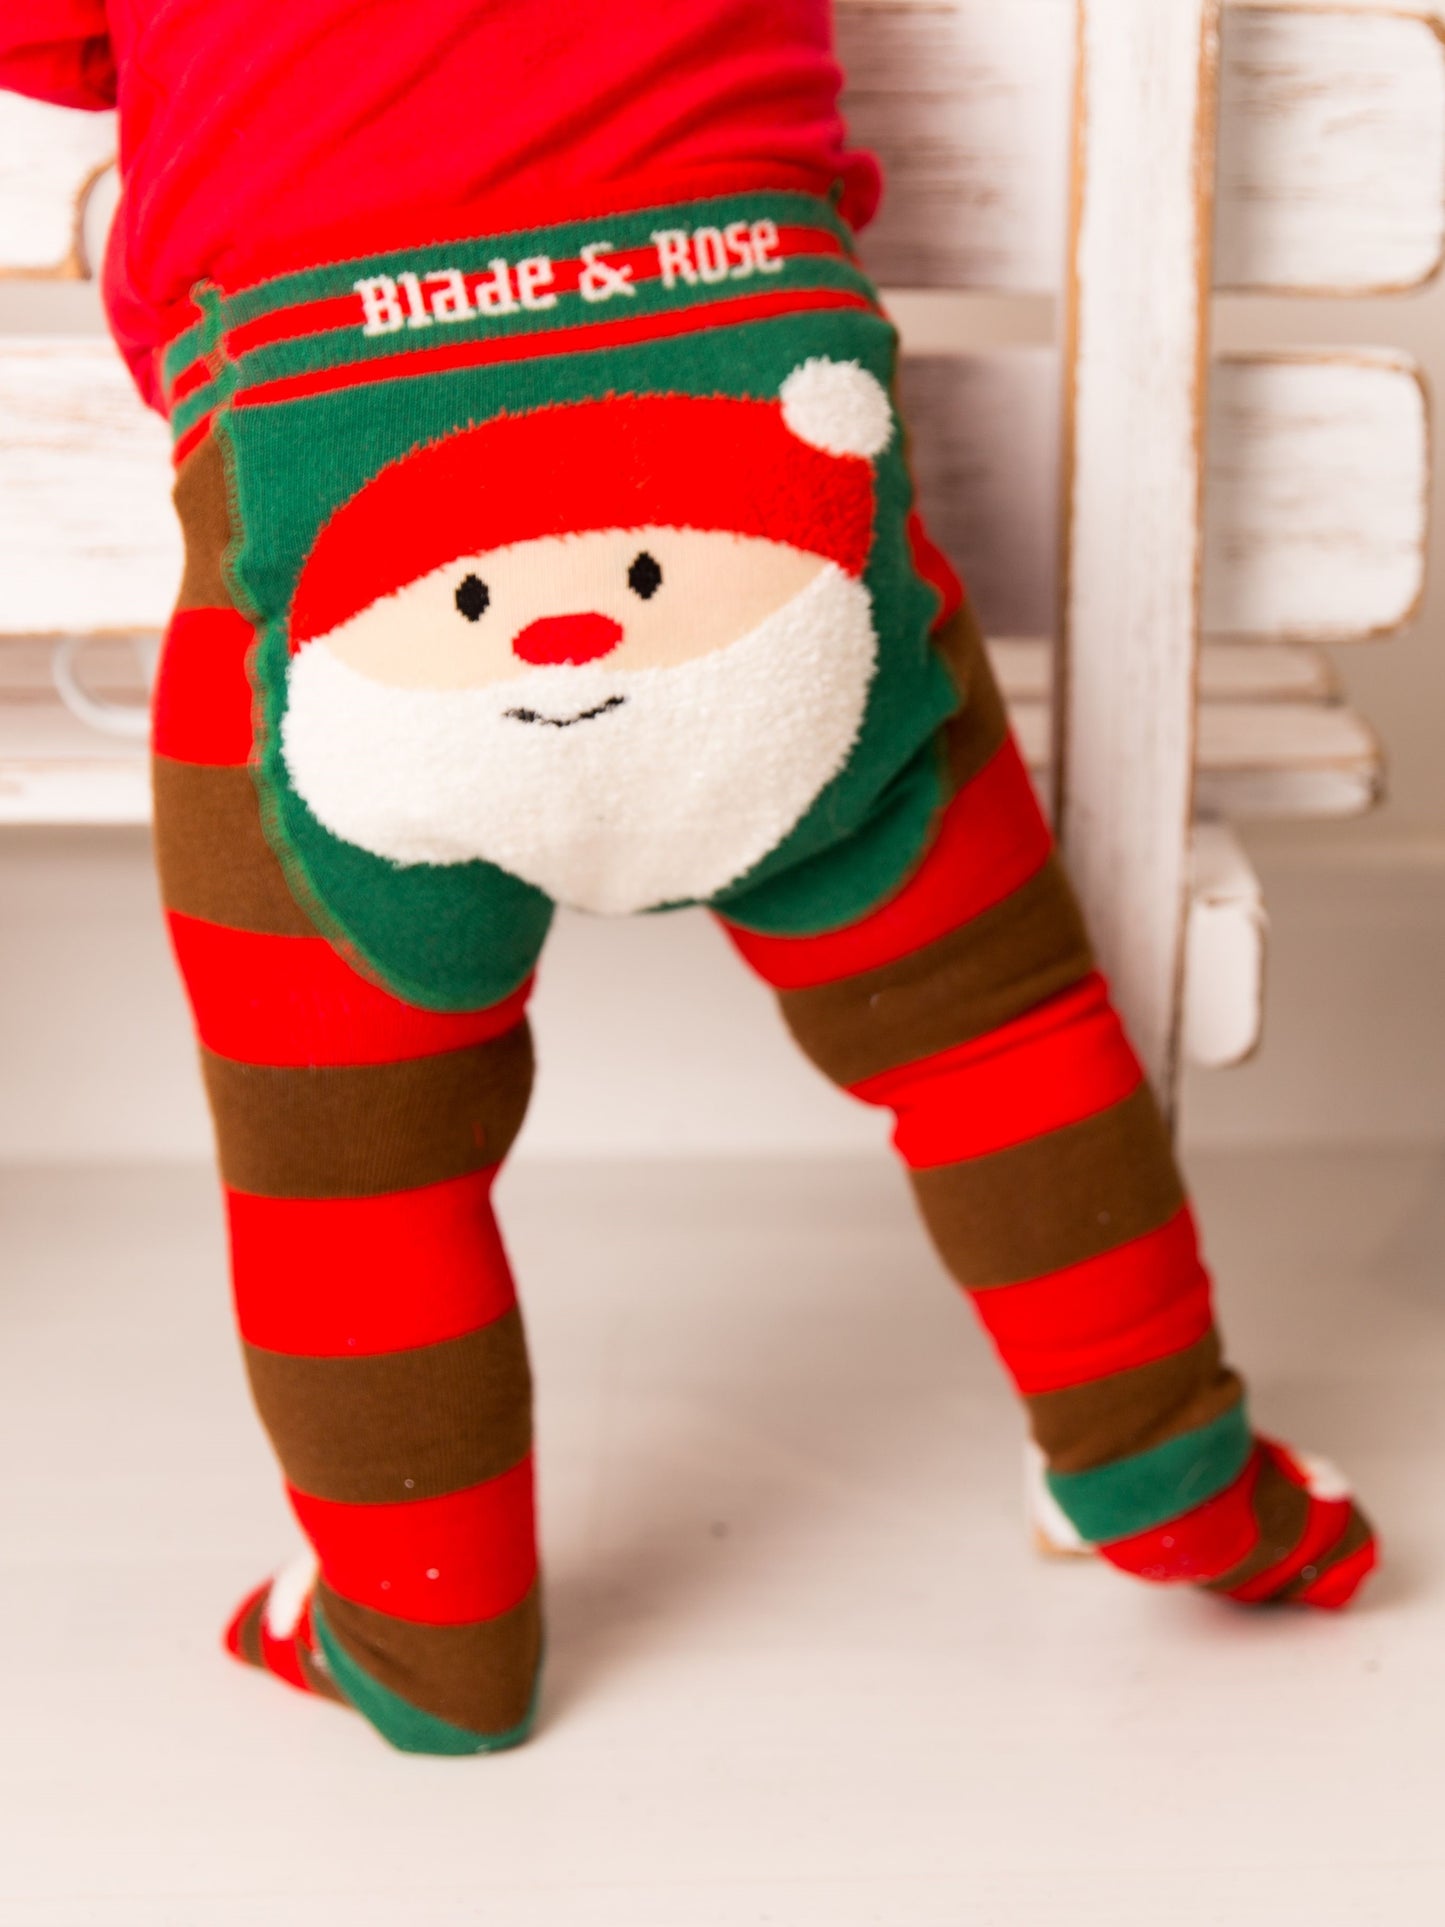 blade & rose santa leggings at whippersnappers online